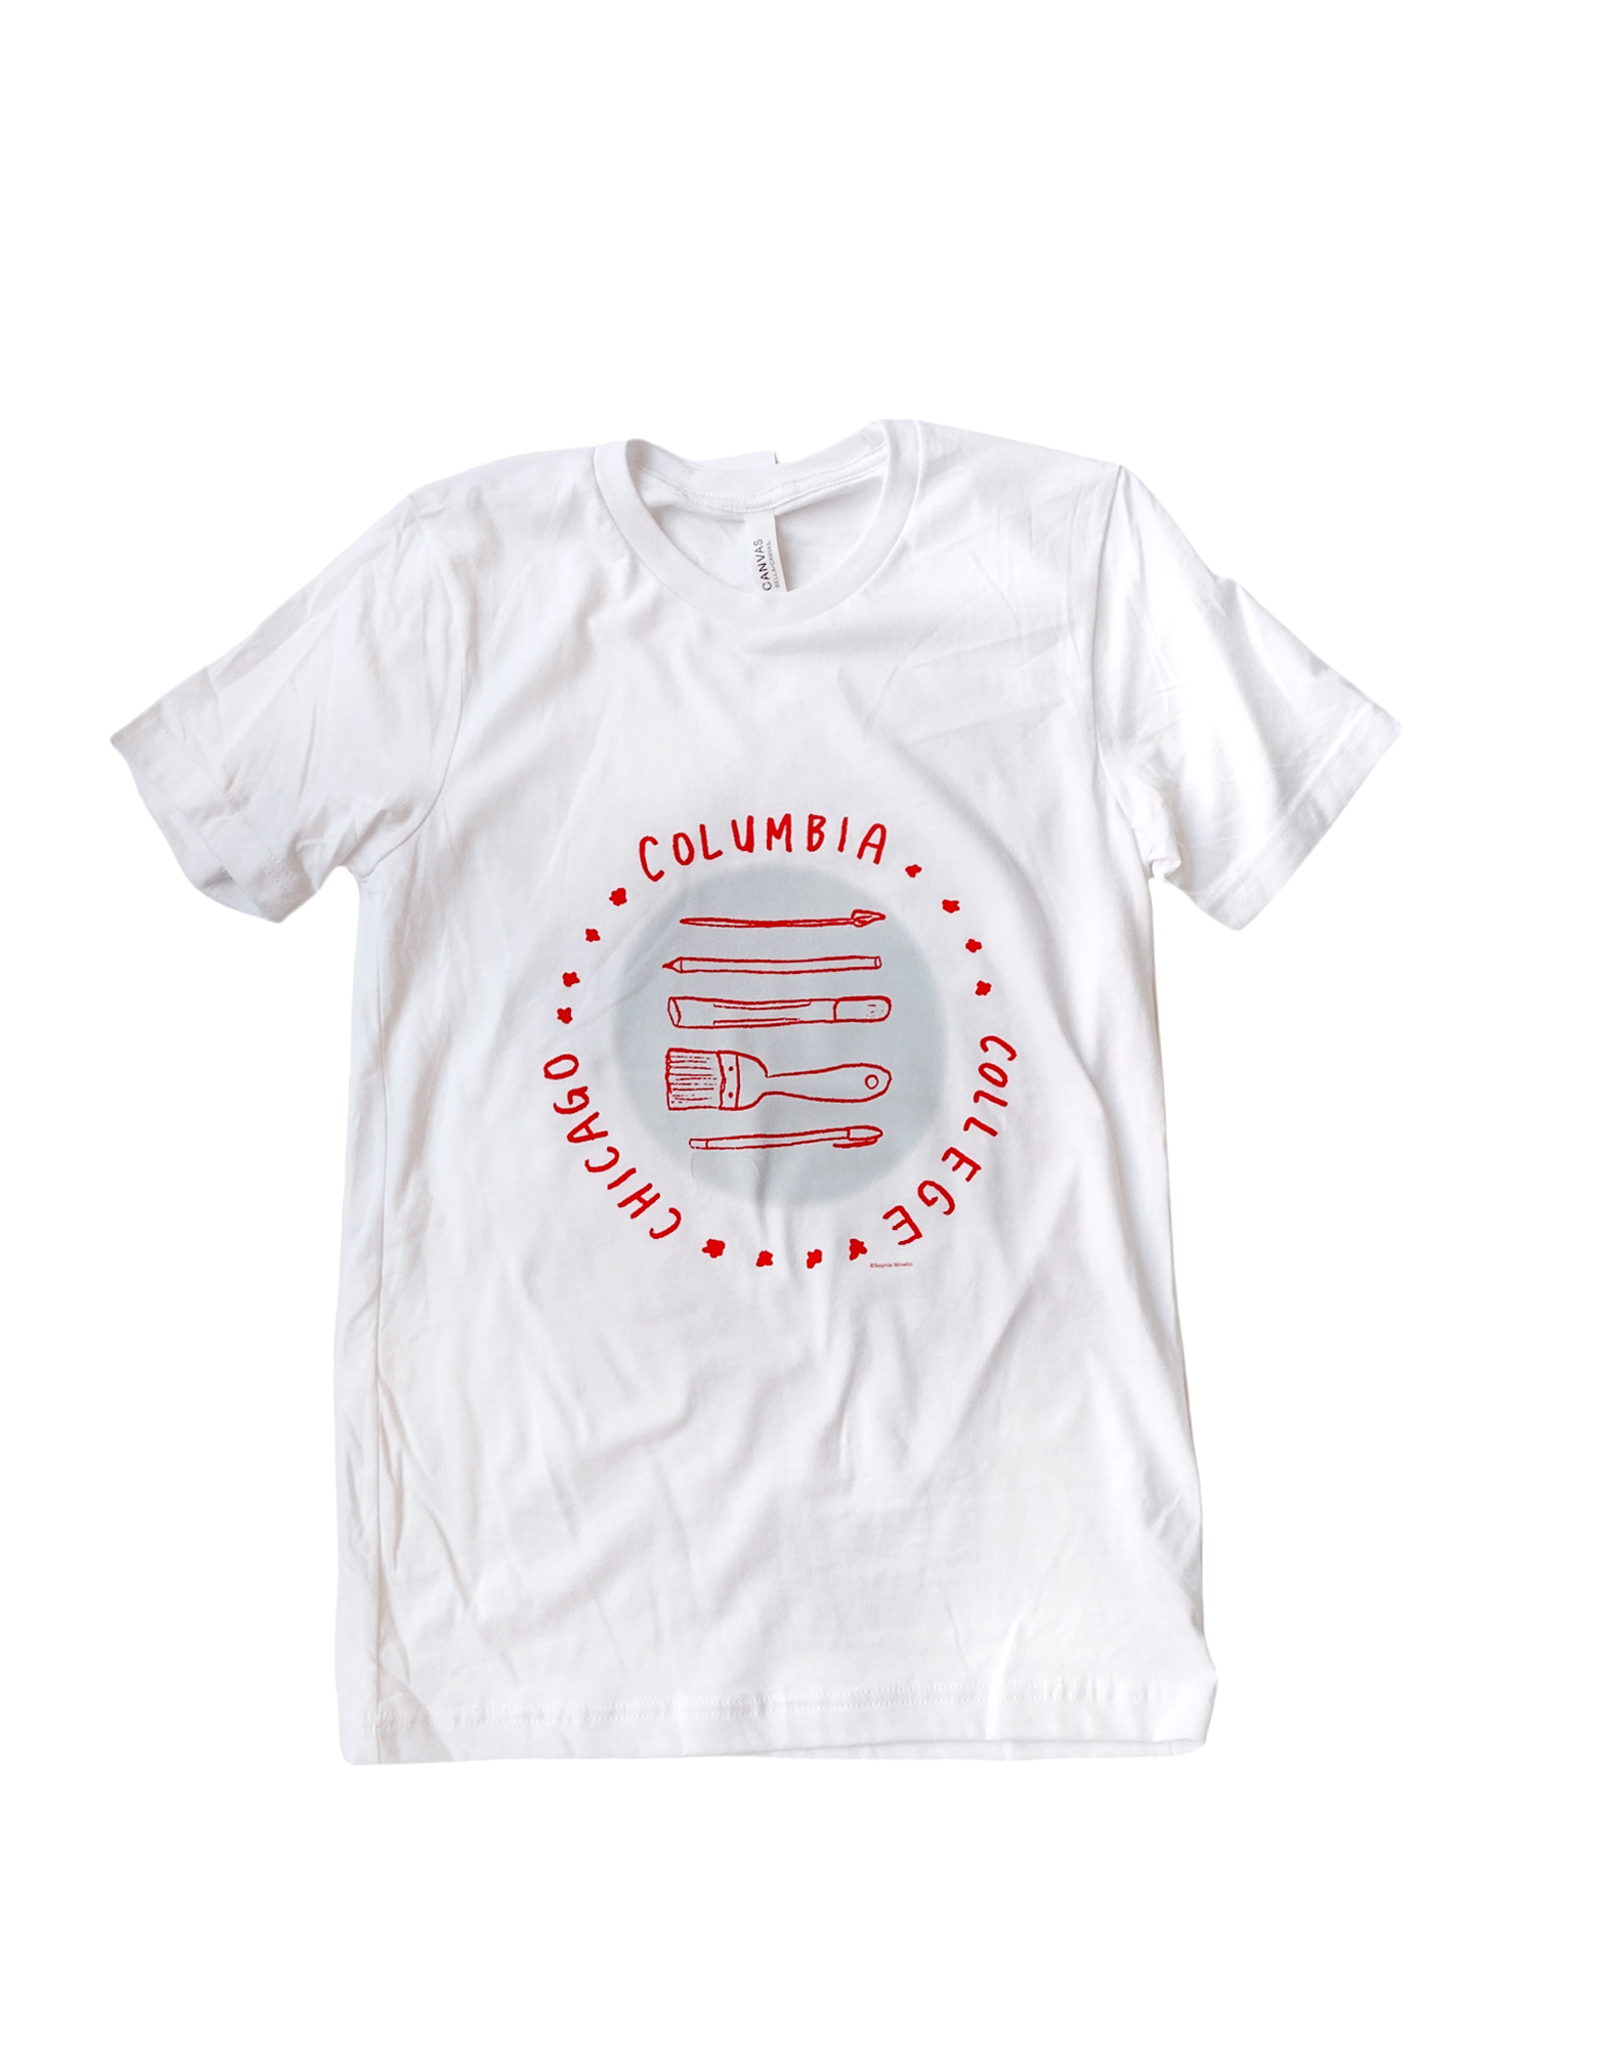 Buy Columbia, By Columbia New: White Columbia Tshirt